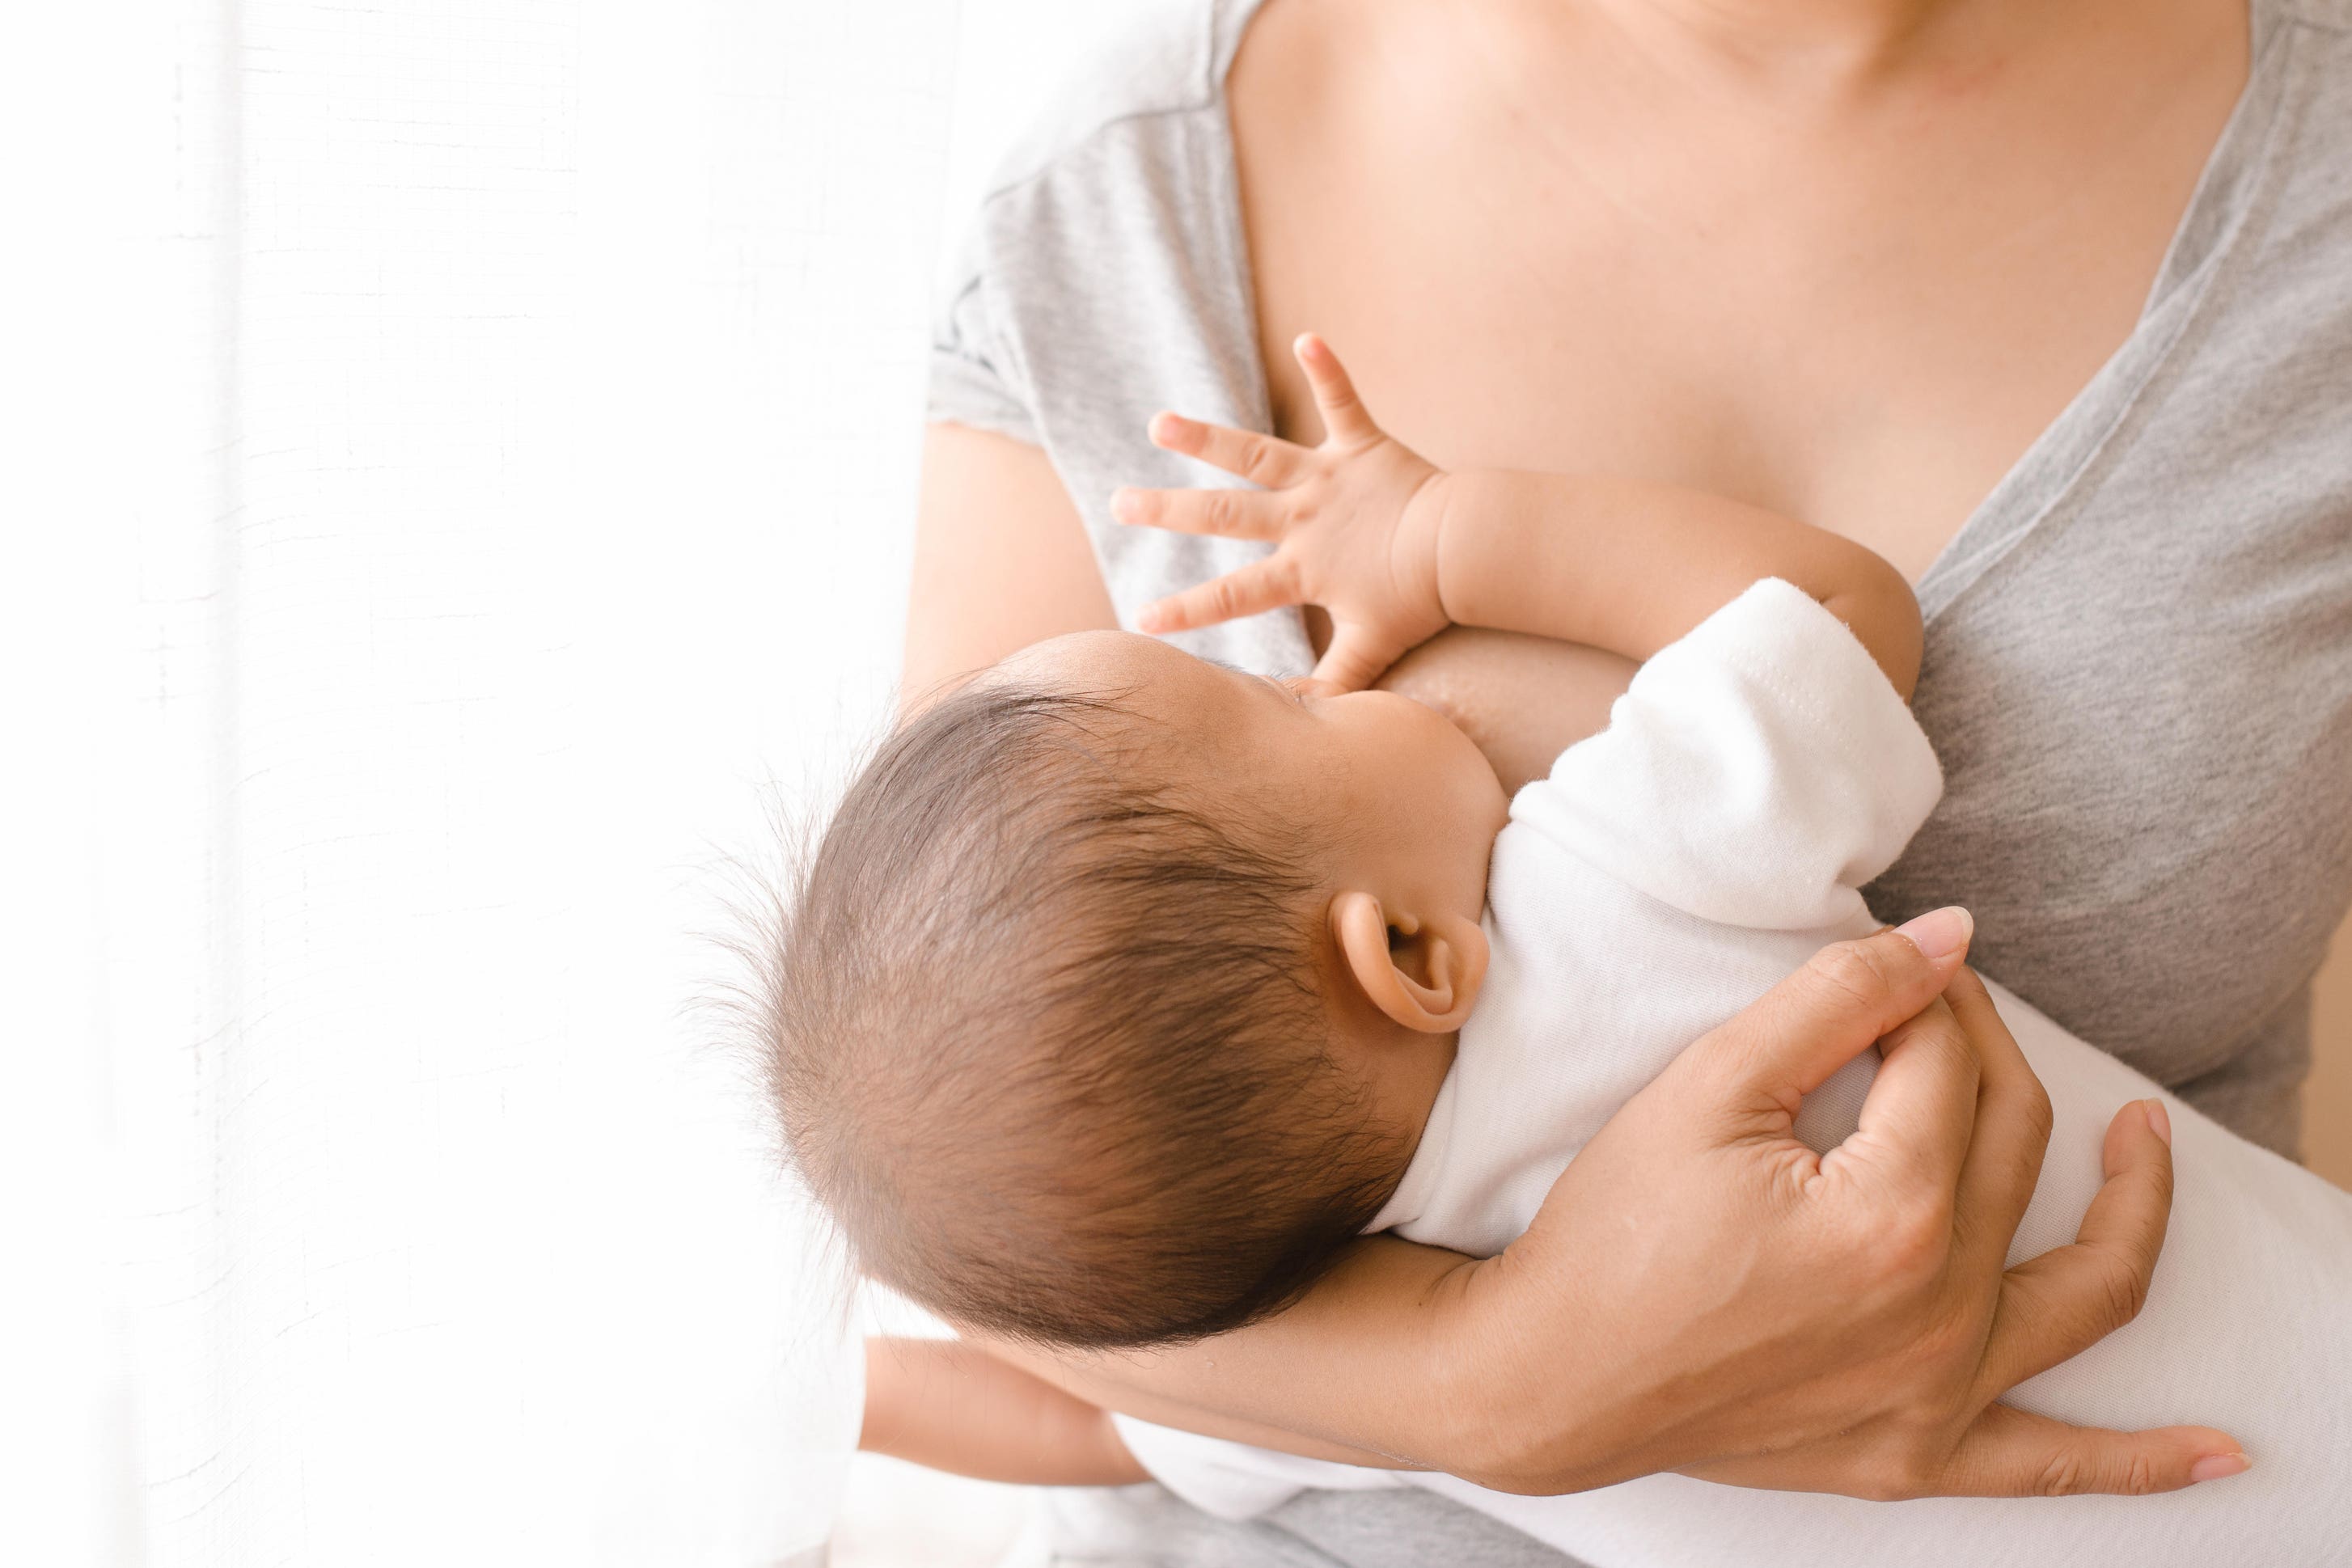 Breastfeeding Mage - YouTube